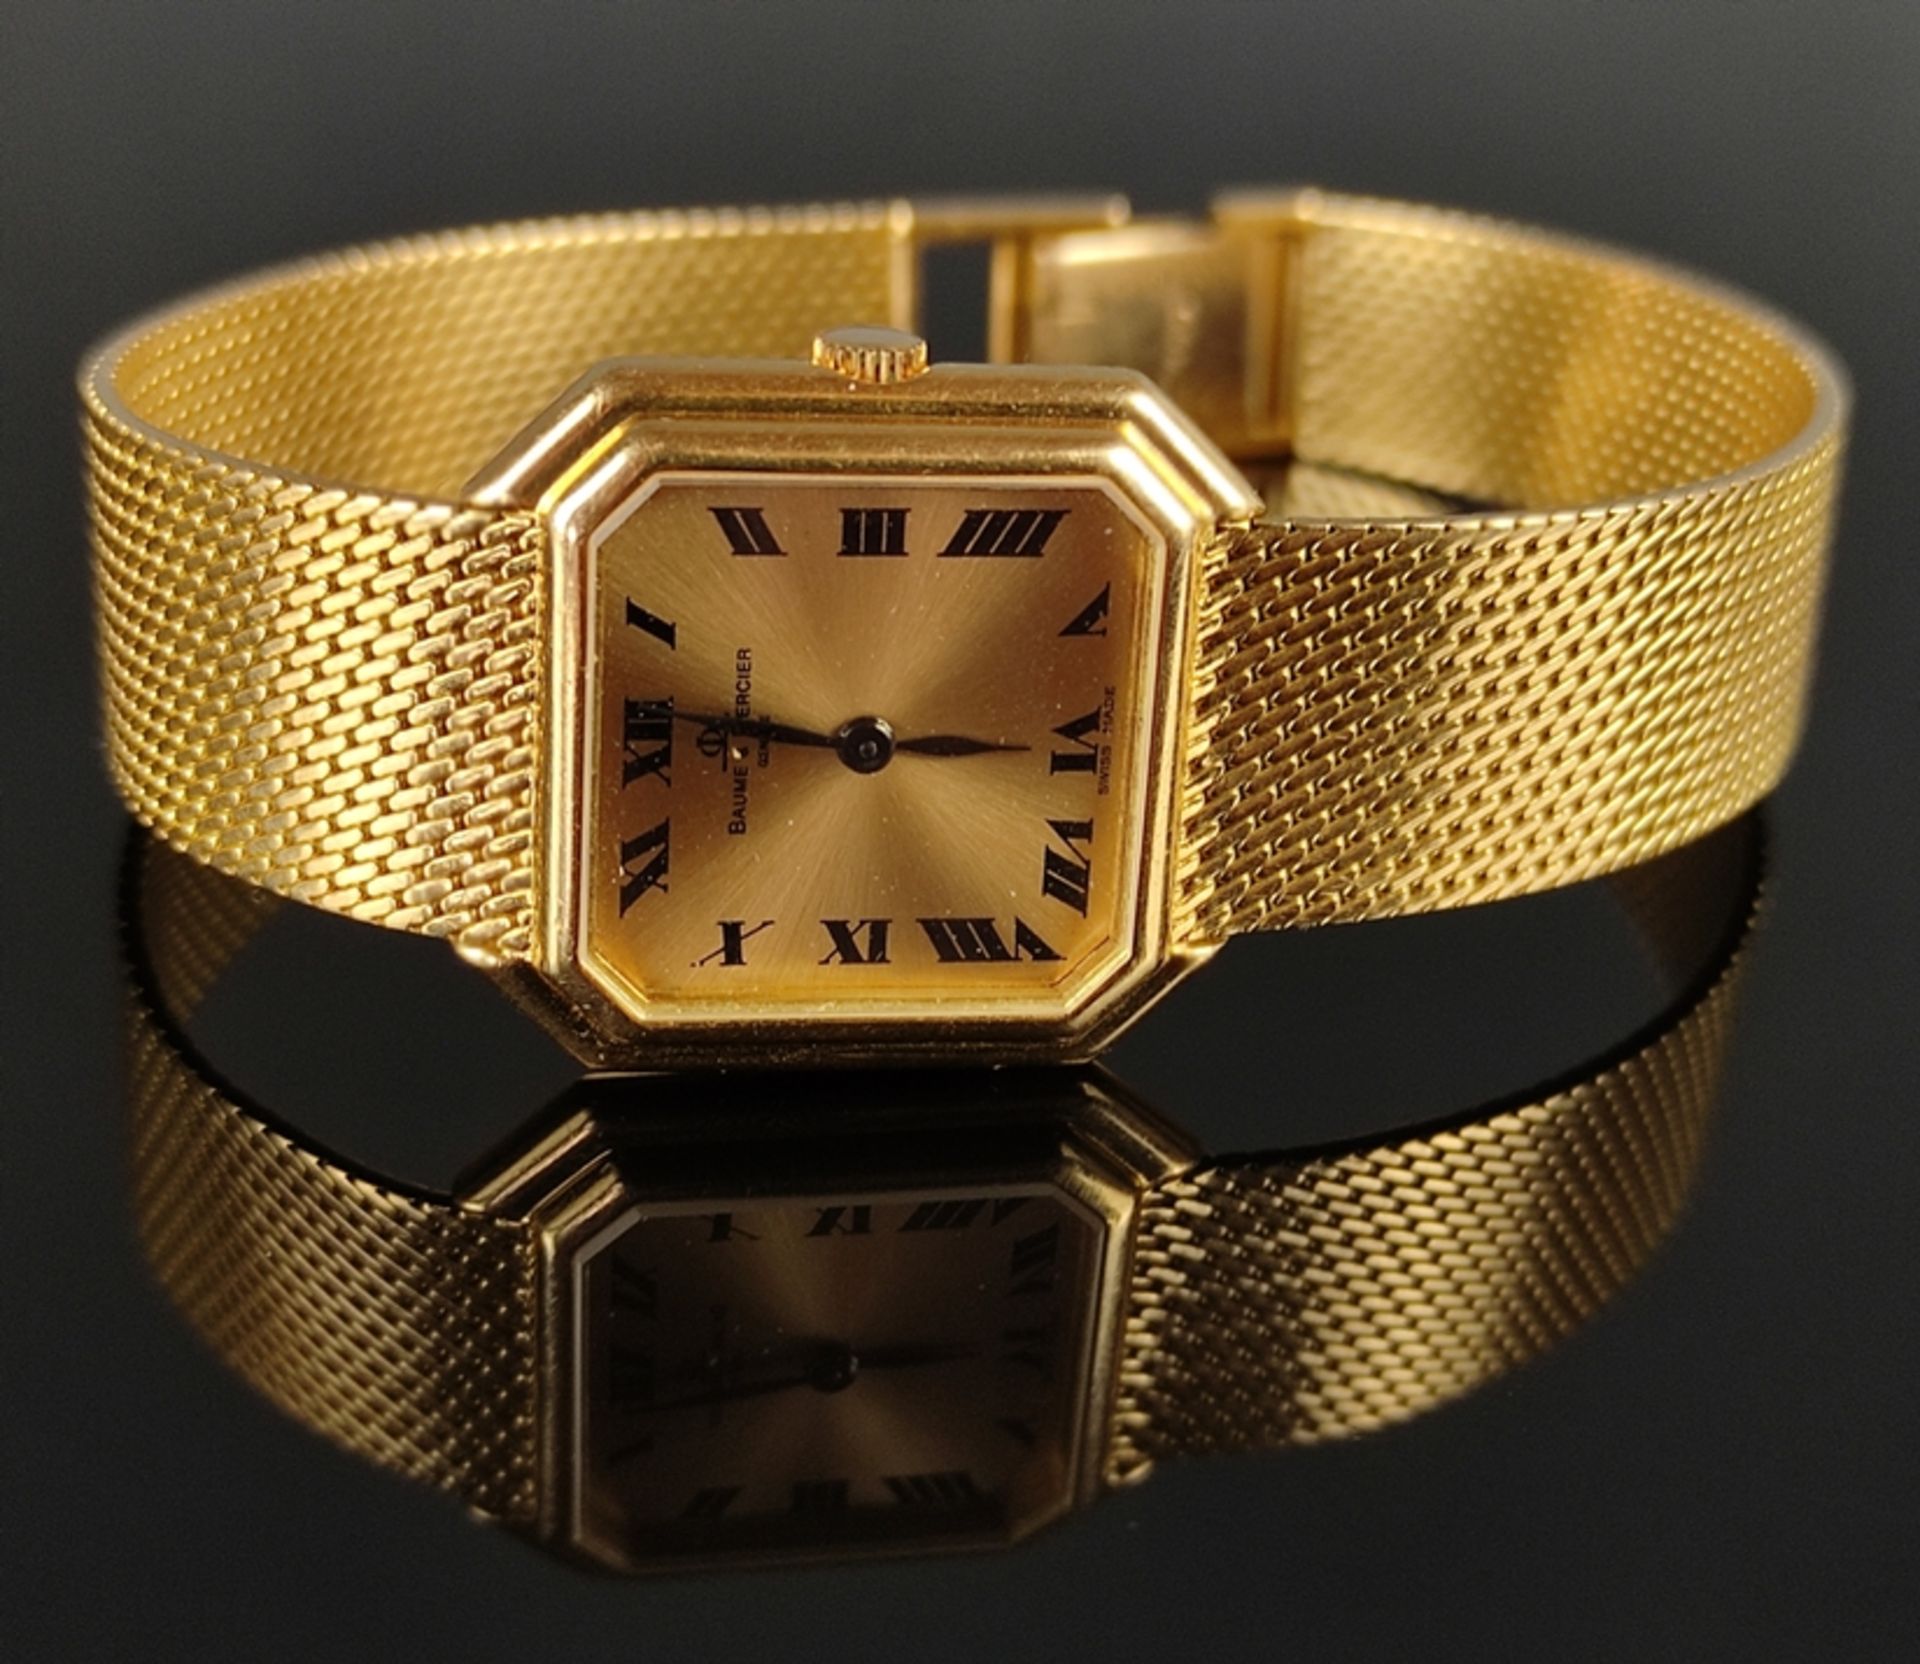 Wristwatch, Baum & Mercier, Geneve / Geneva, octagonal case dial with Roman numerals, 23.3x23.3mm, 